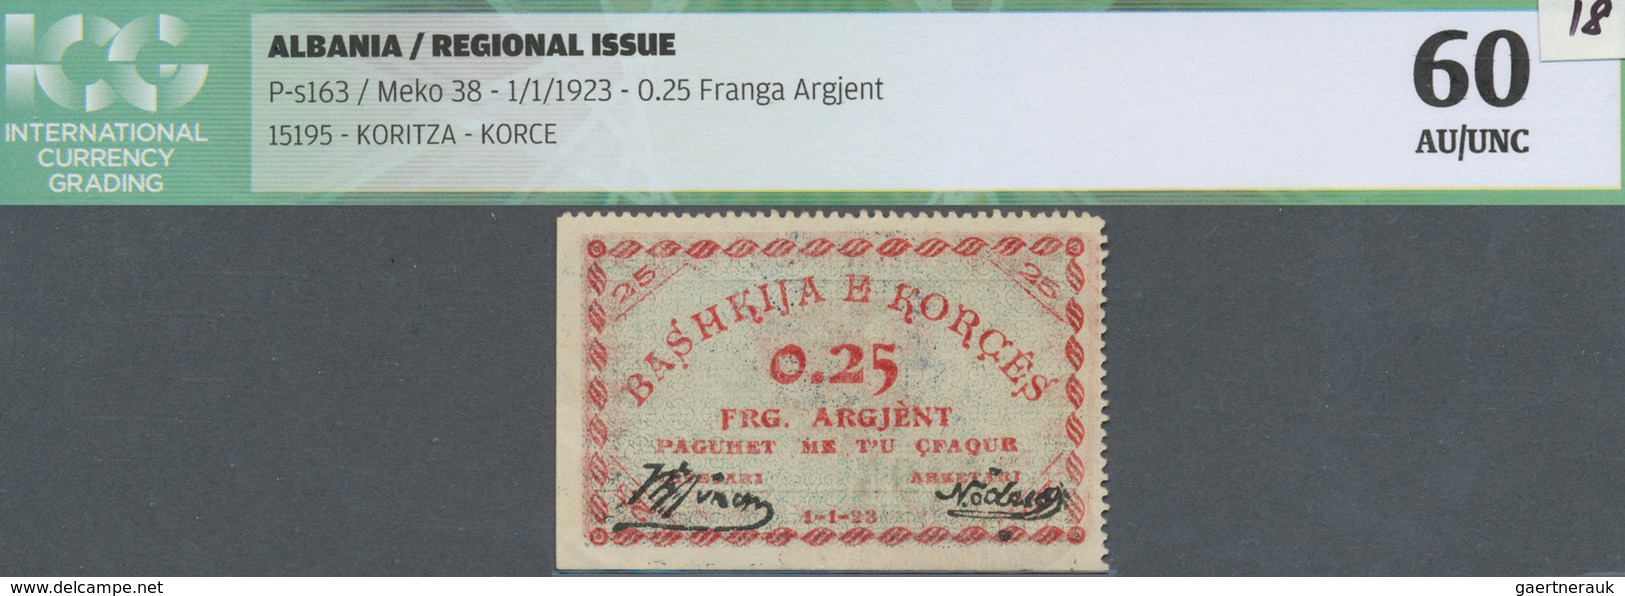 Albania / Albanien: 0.25 Franga Argjent 01.01.1923 P. S163, Unfolded, Crisp Paper And Original Color - Albania